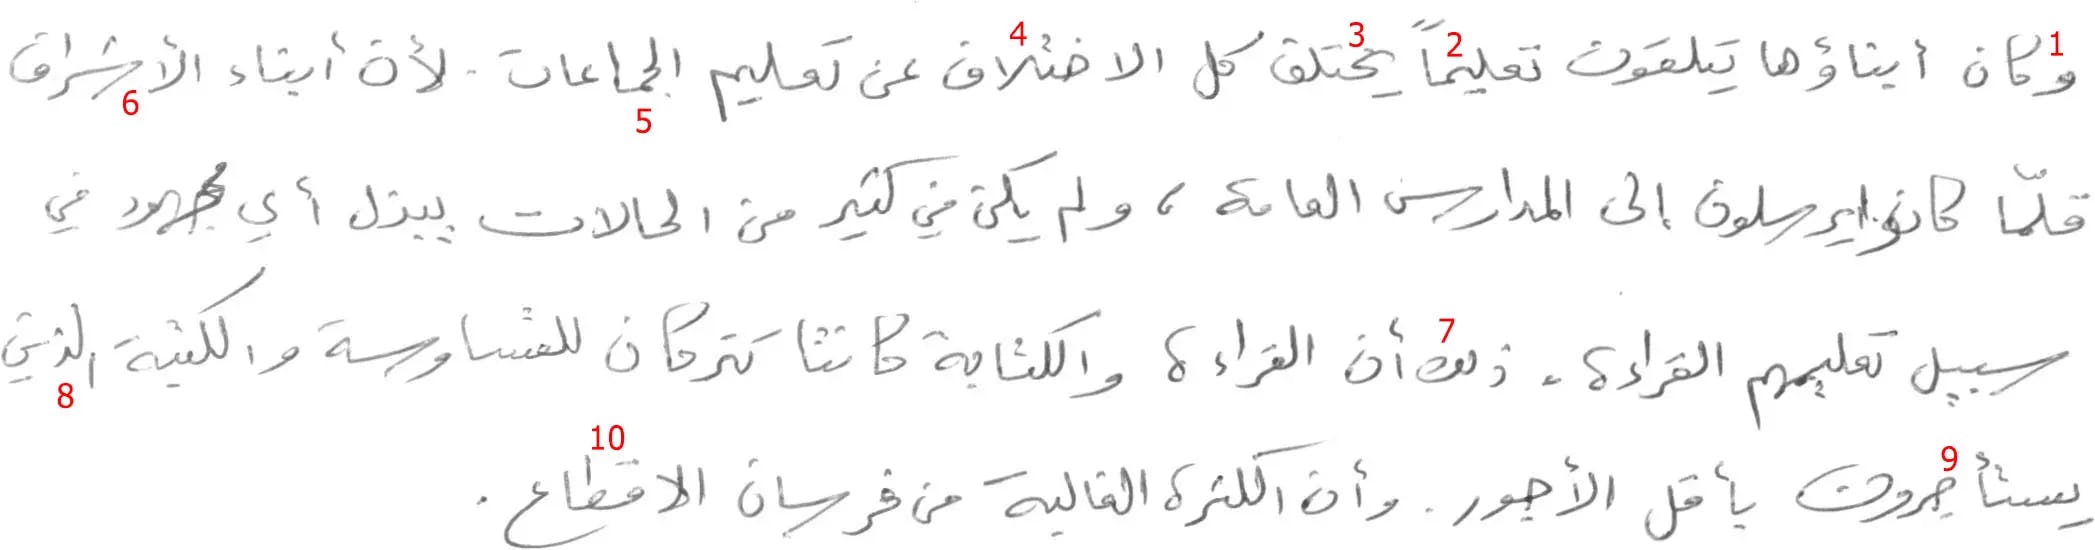 arabic-handwriting-04